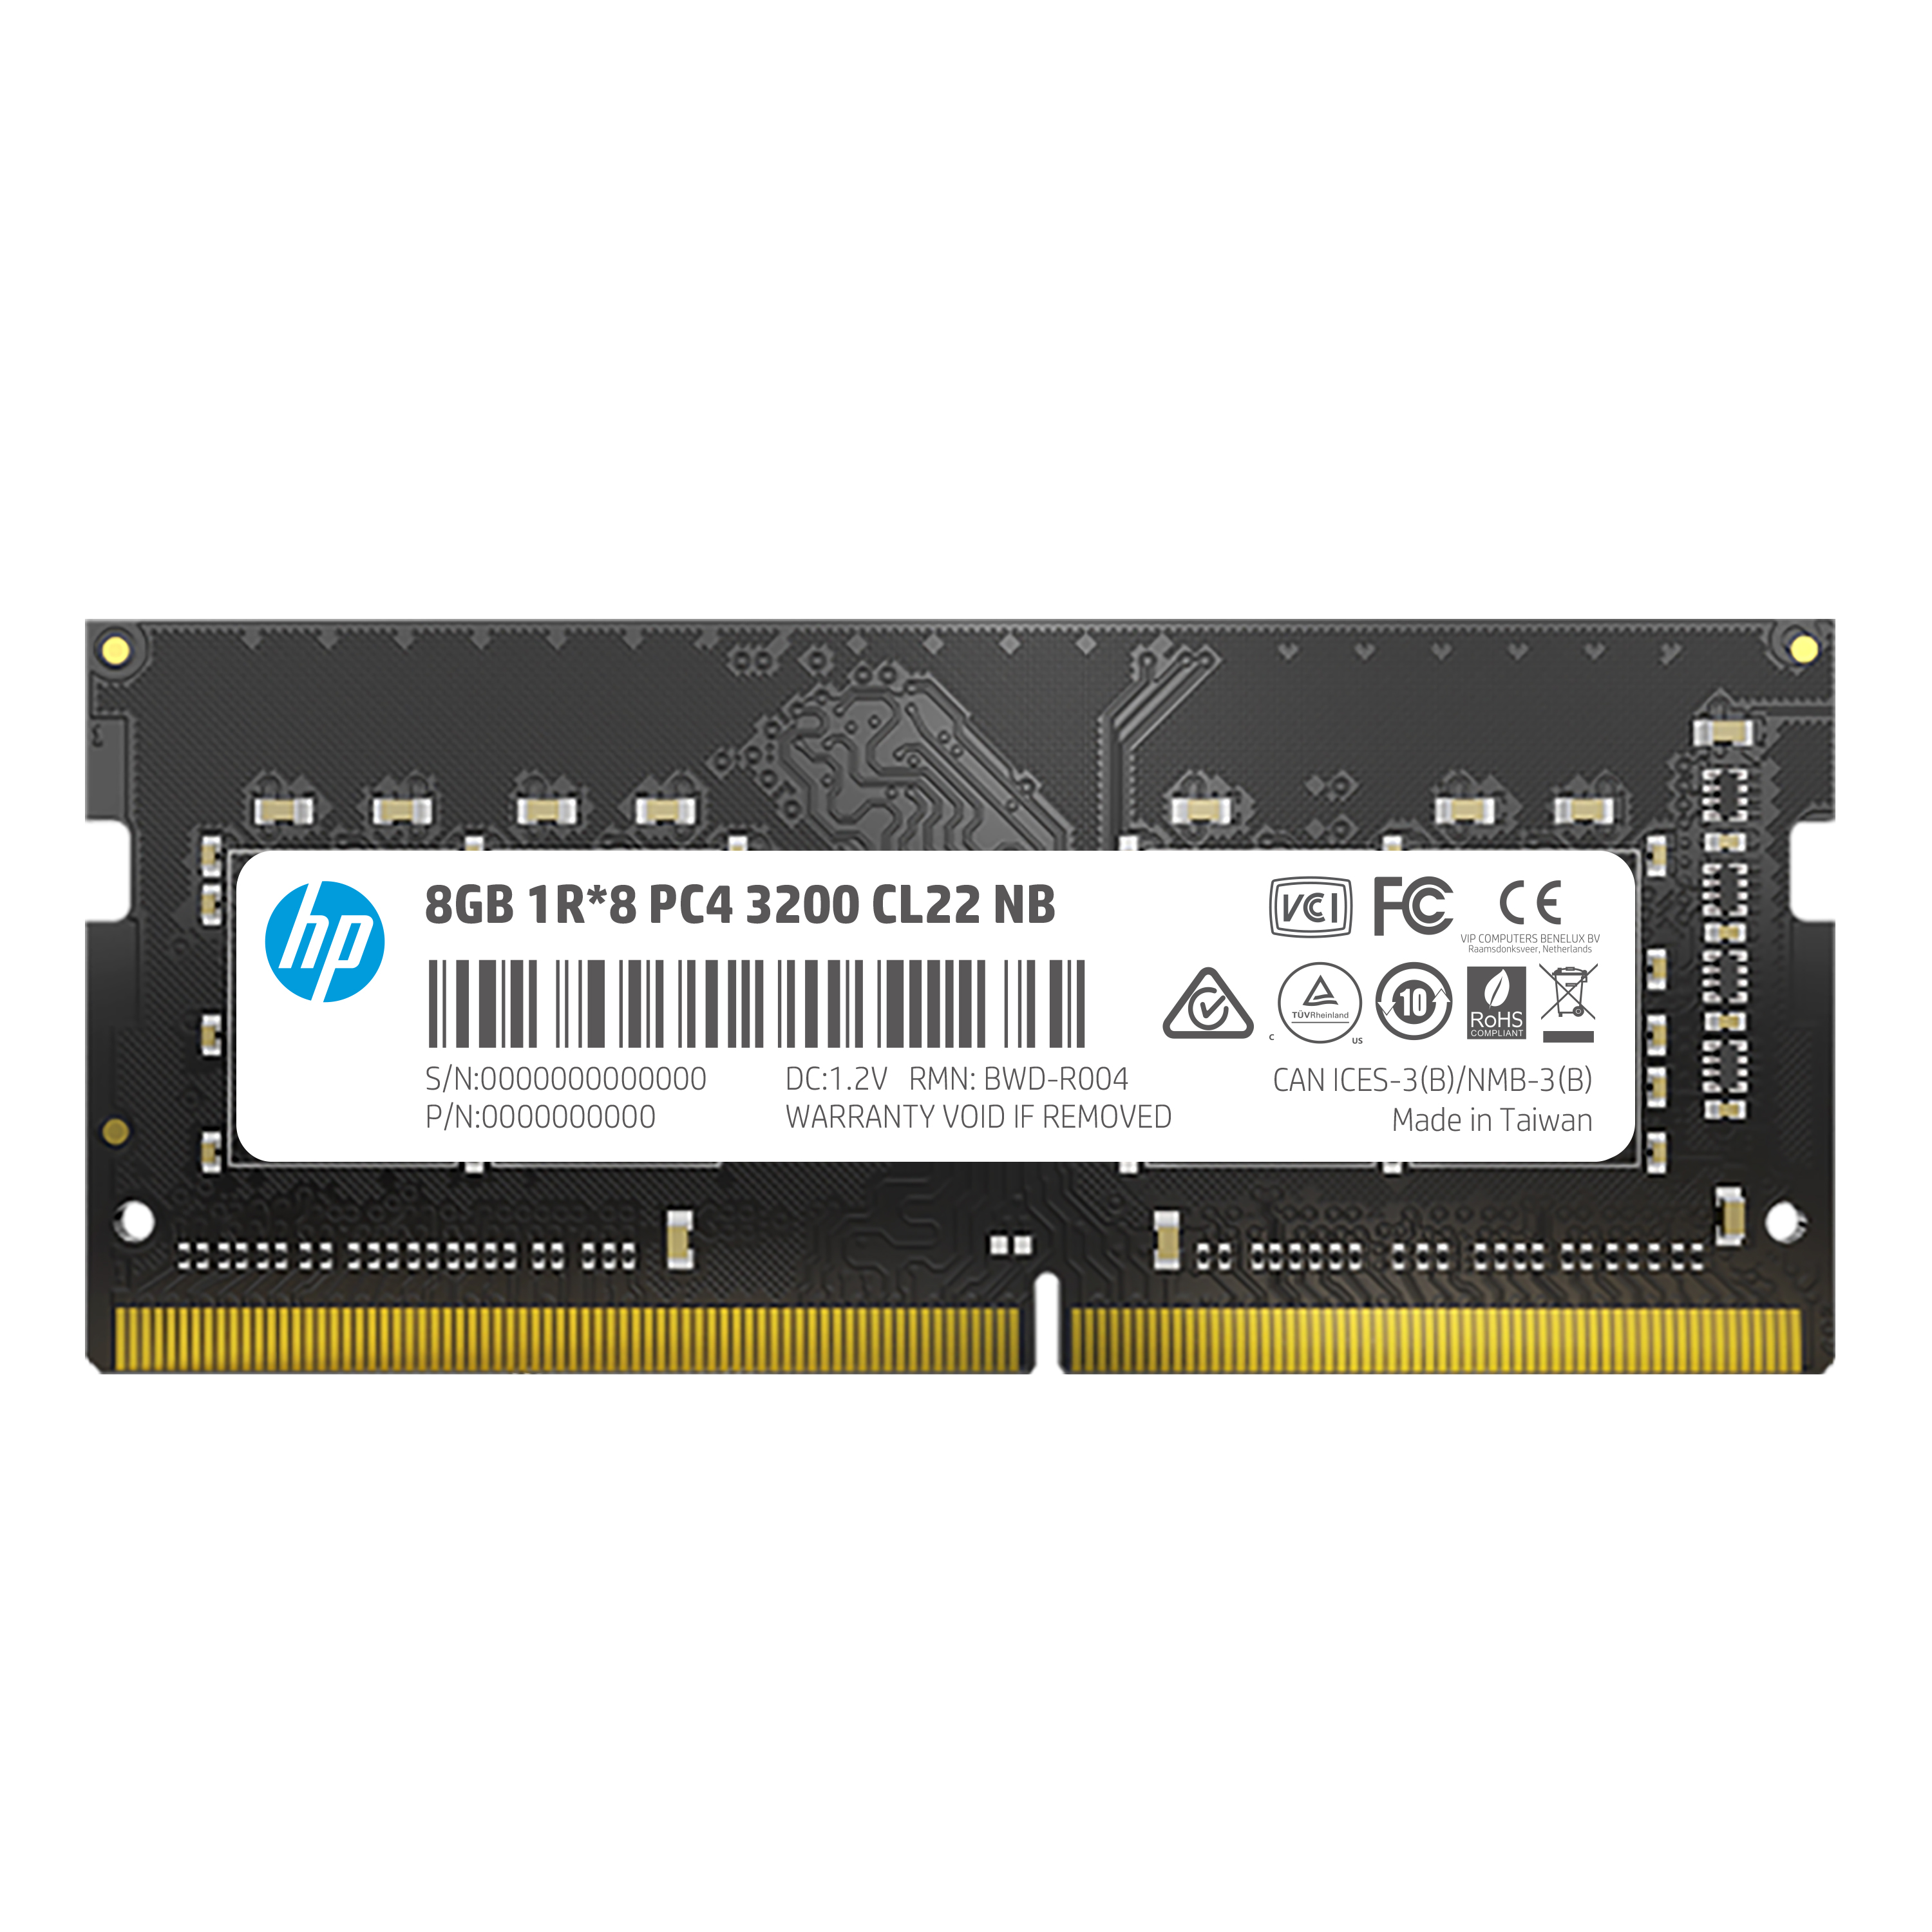 HP V2 DDR4 Memory